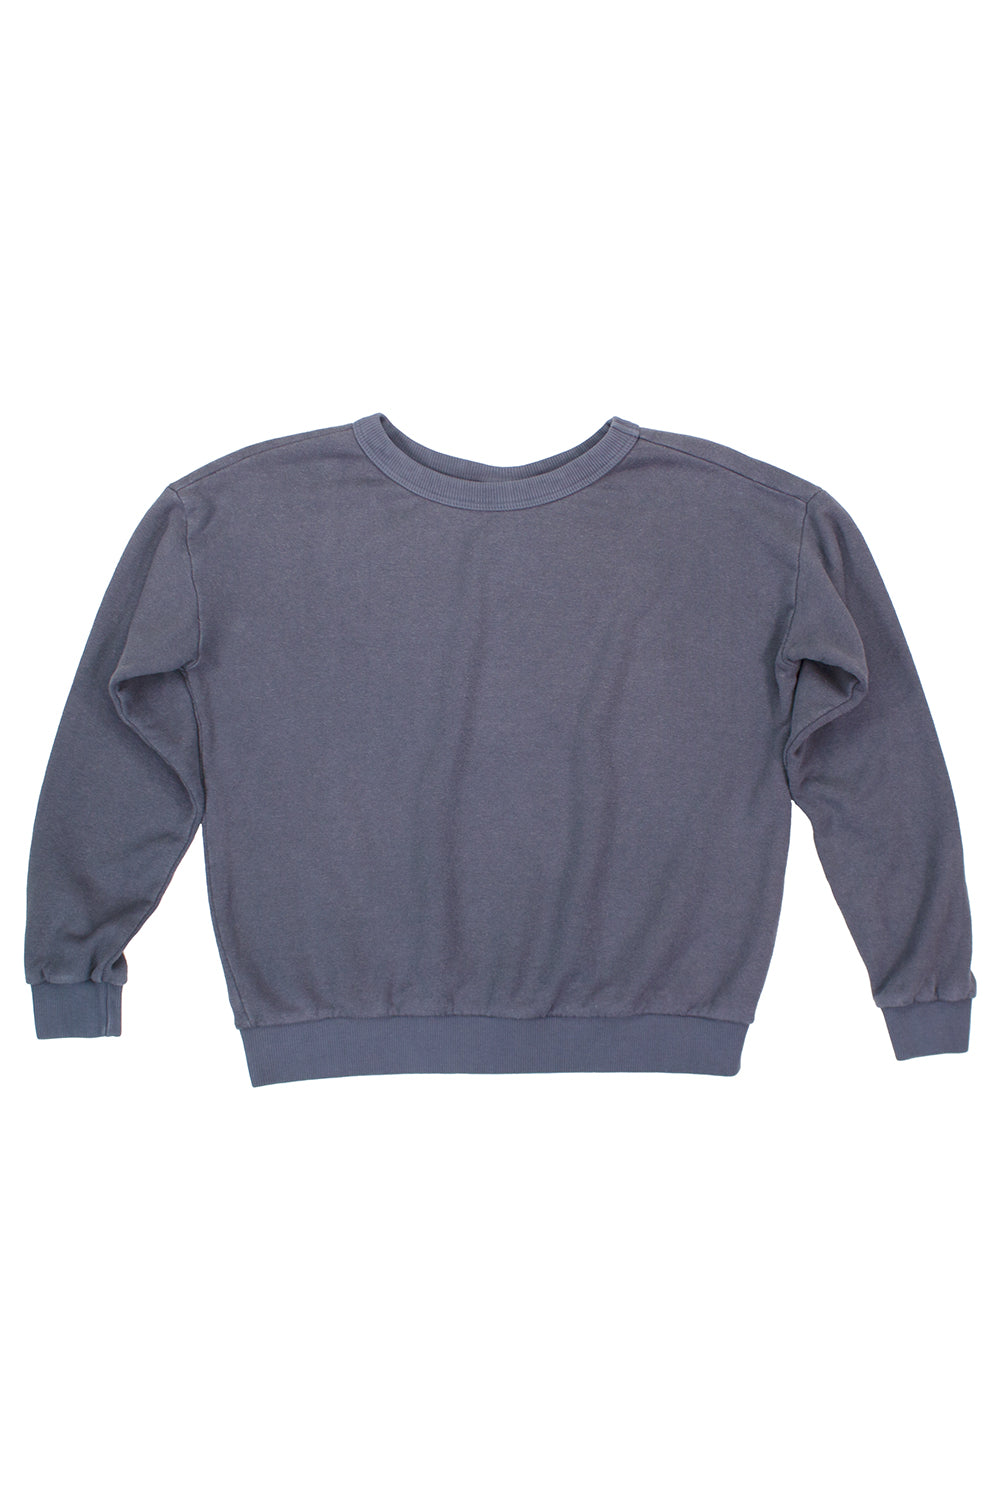 Crux Cropped Sweatshirt | Jungmaven Hemp Clothing & Accessories / Color: Diesel Gray